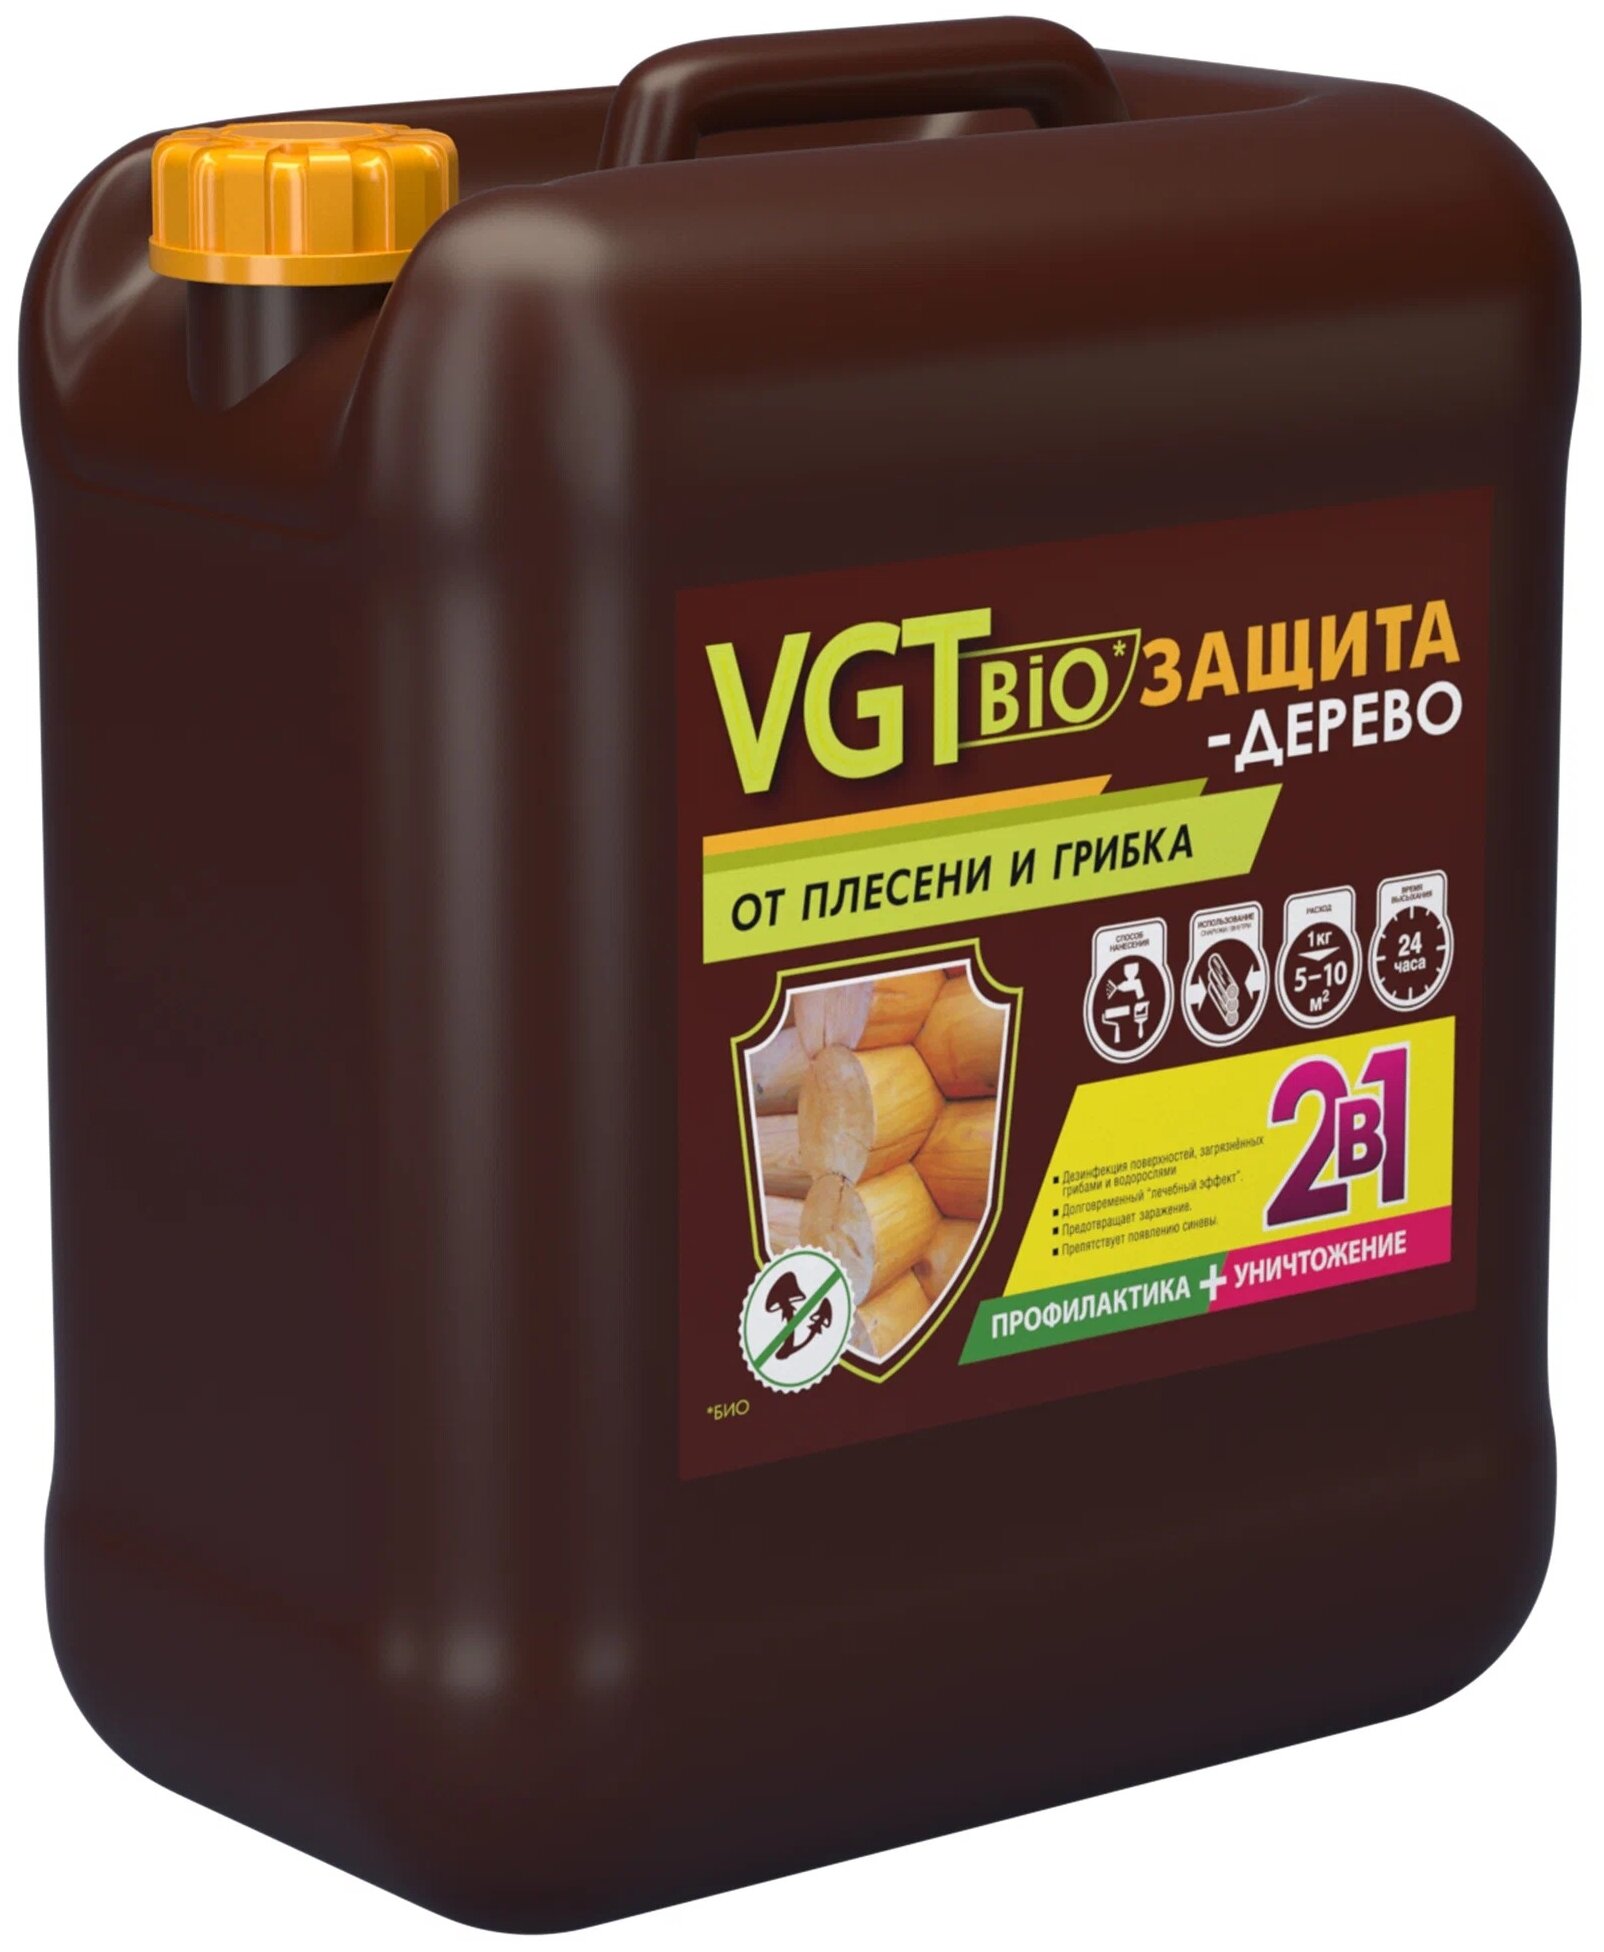 VGT пропитка от плесени и грибка BIO Защита-Дерево